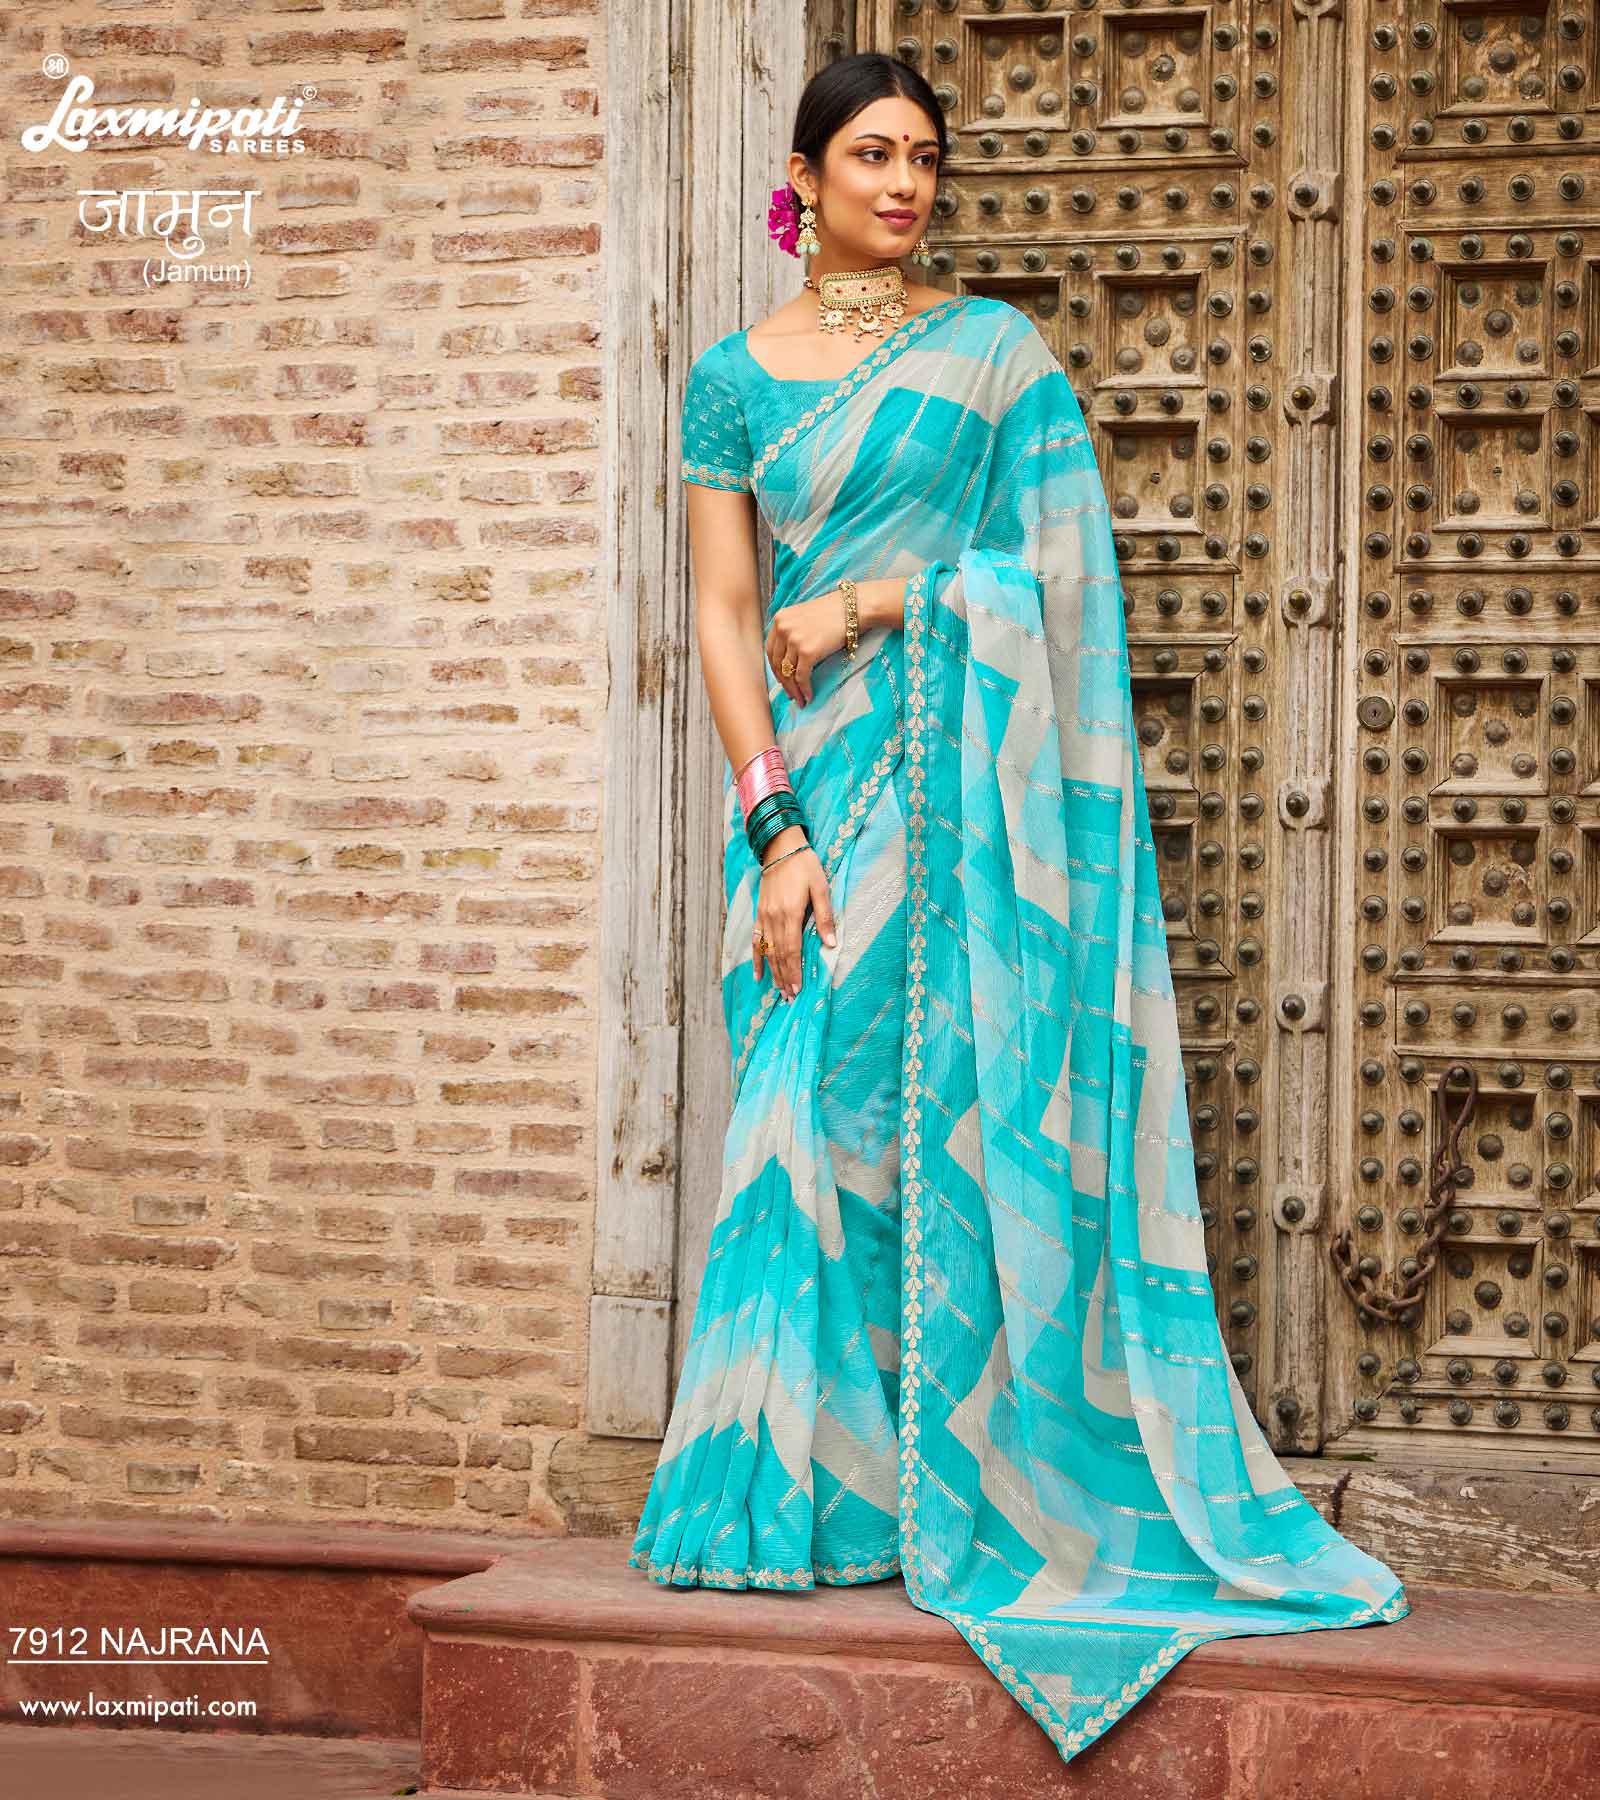 Laxmipati Textile Jaquard Silk Fency Peacock Checks Bandhni Saree, 6.3 M  (with Blouse Piece) at Rs 1300 in Jetpur Navagadh